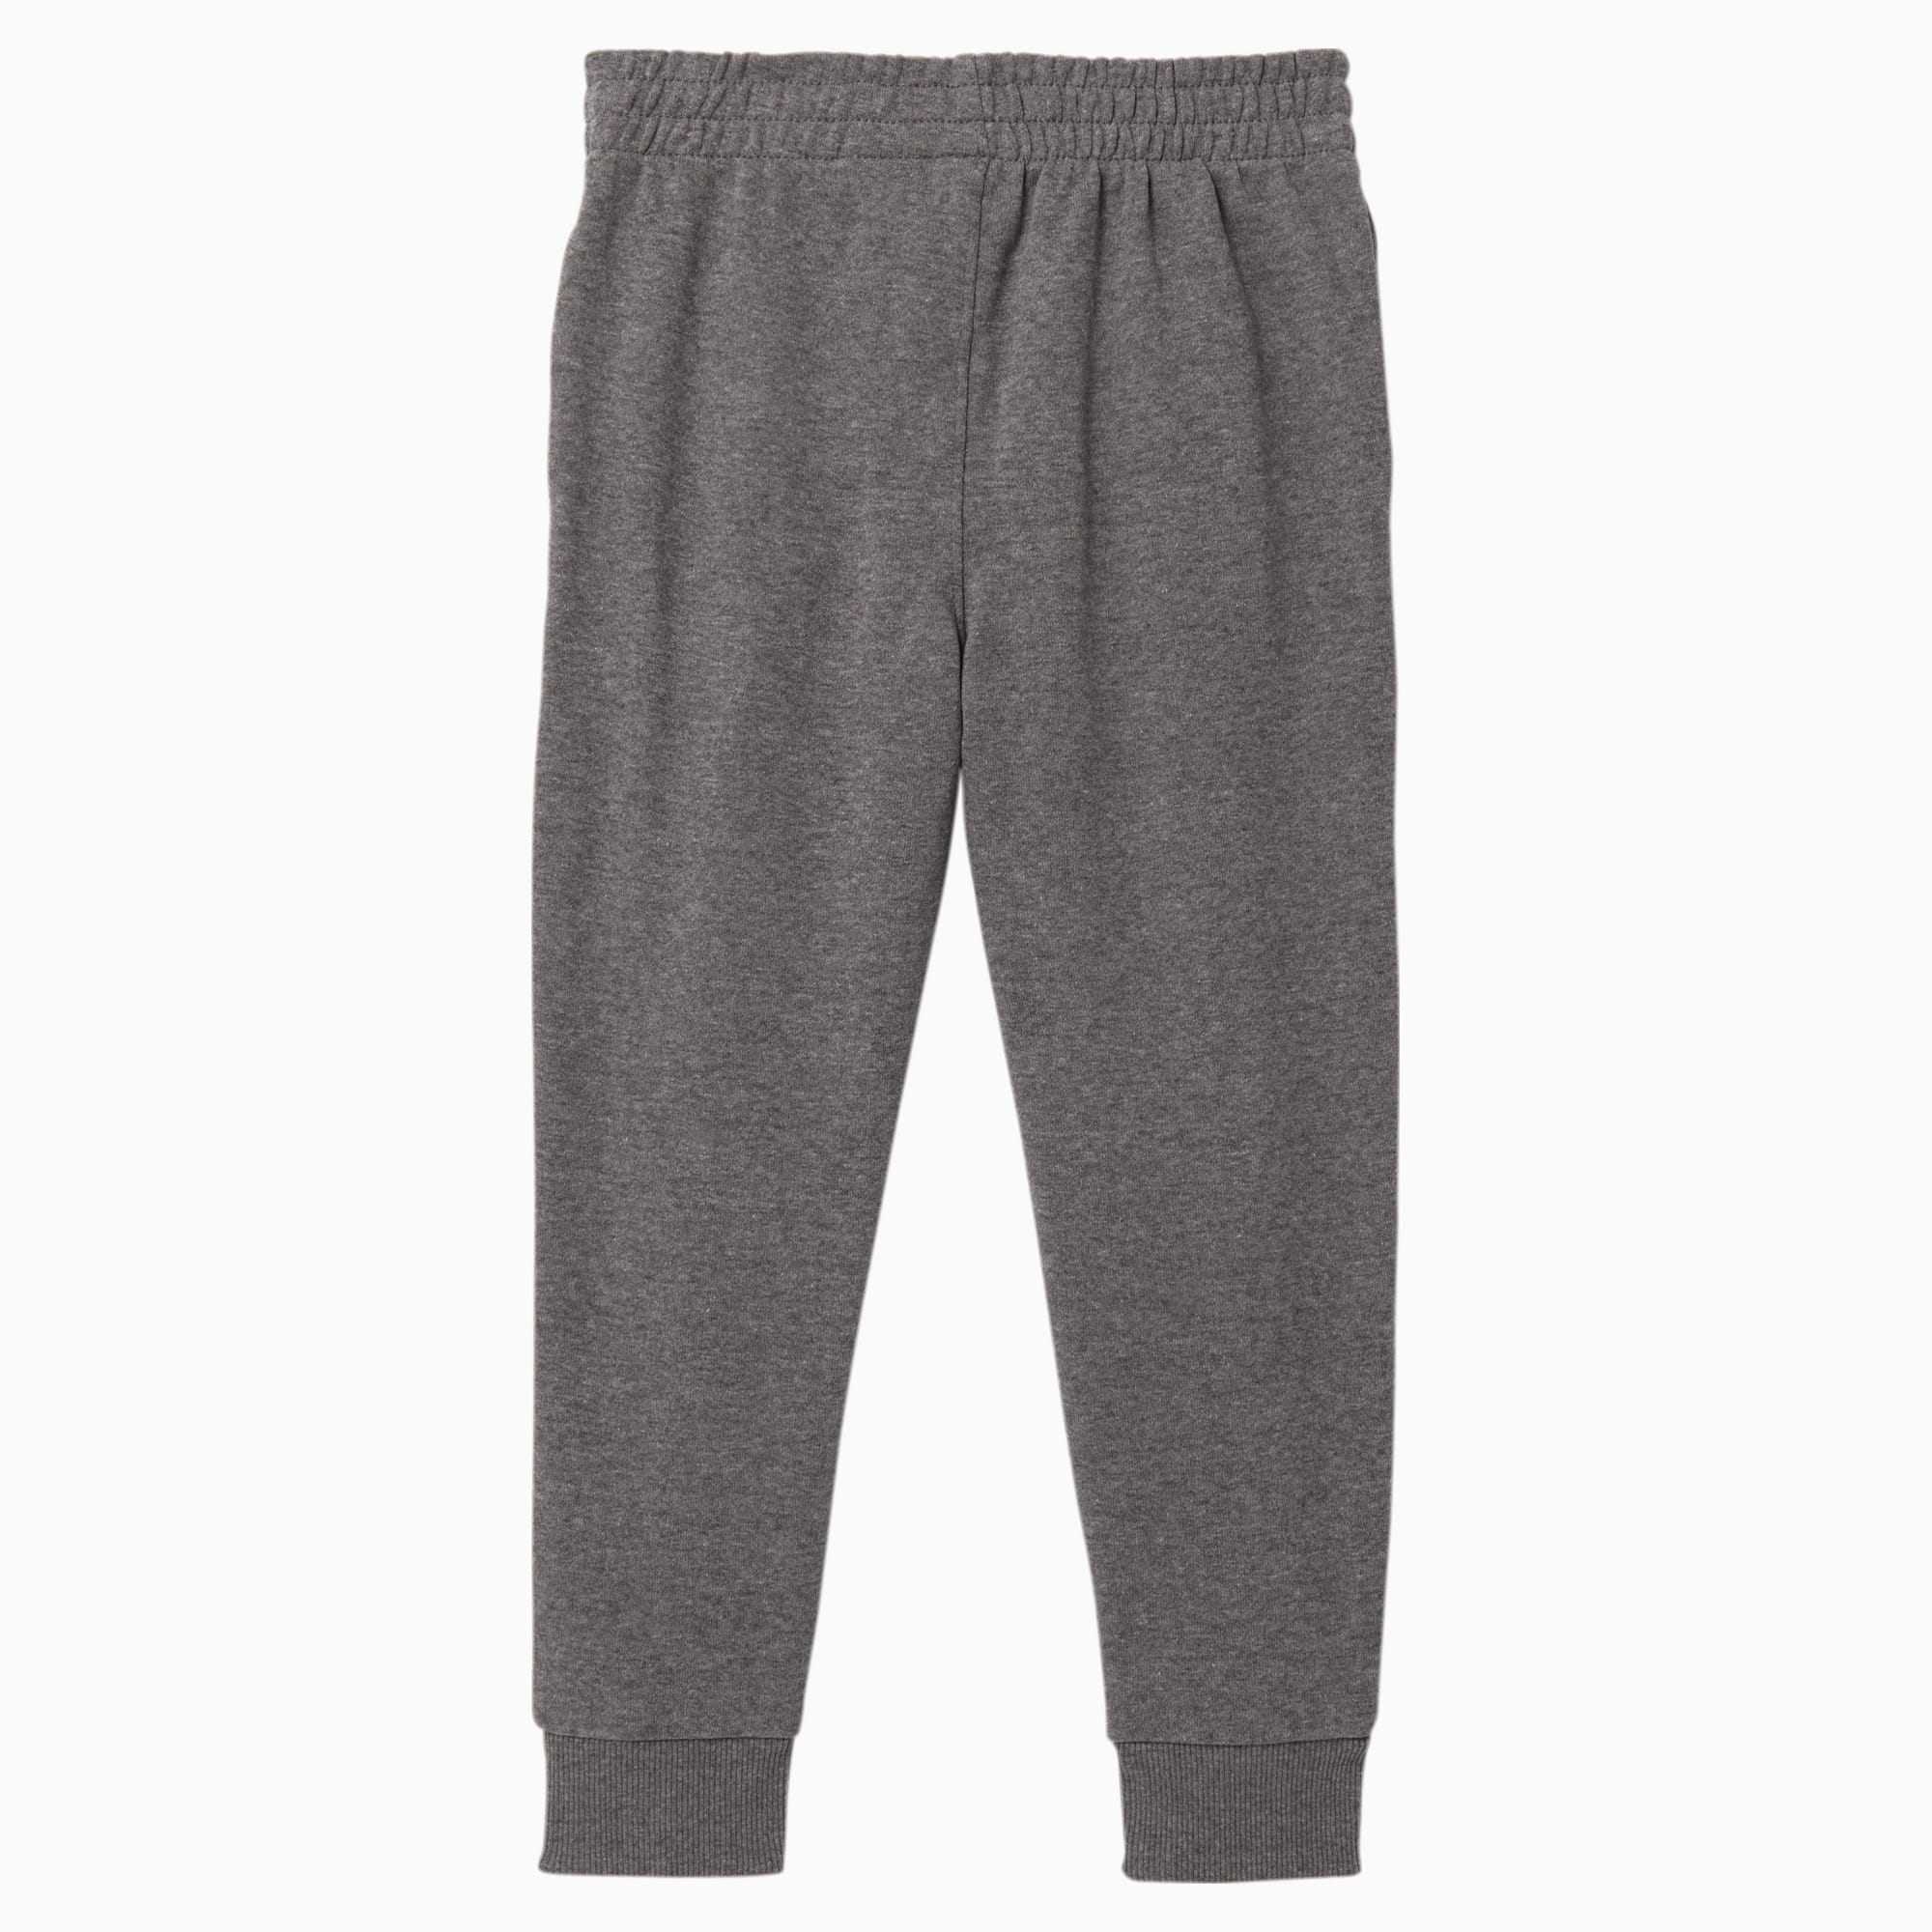 Boy's Youth Gray Puma Sweatpants Size 4T RN#143978 